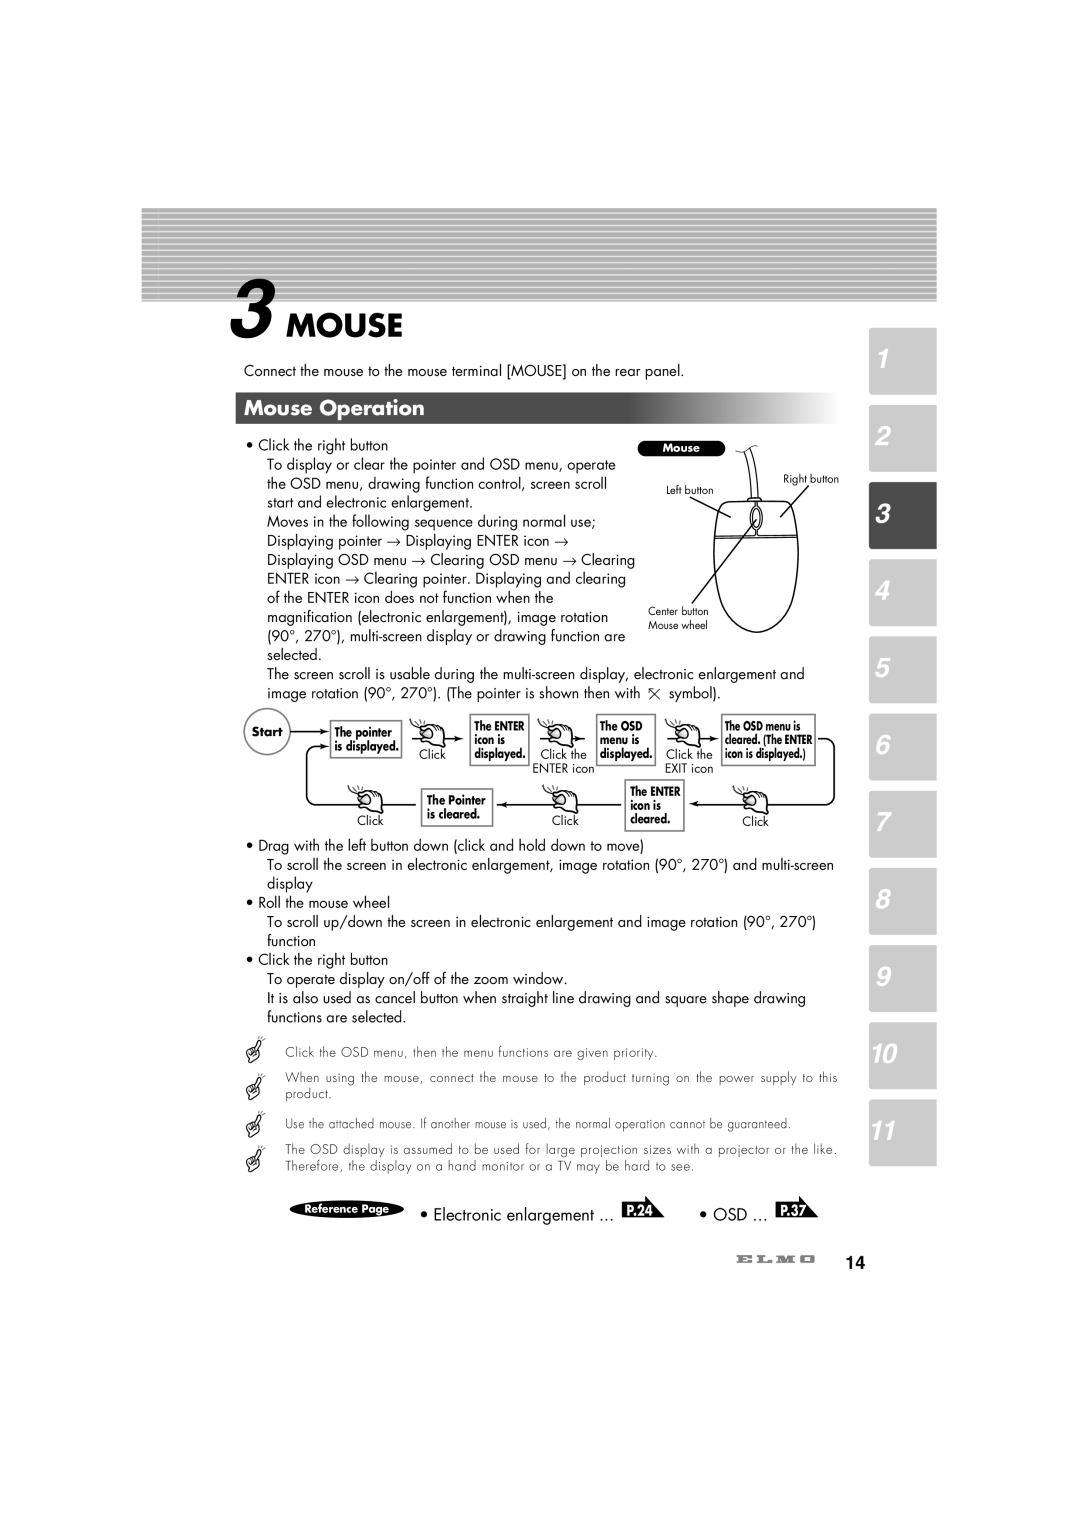 Elmo HV-7100SX instruction manual Mouse Operation, Electronic enlargement, OSD ... P.37, P.24 